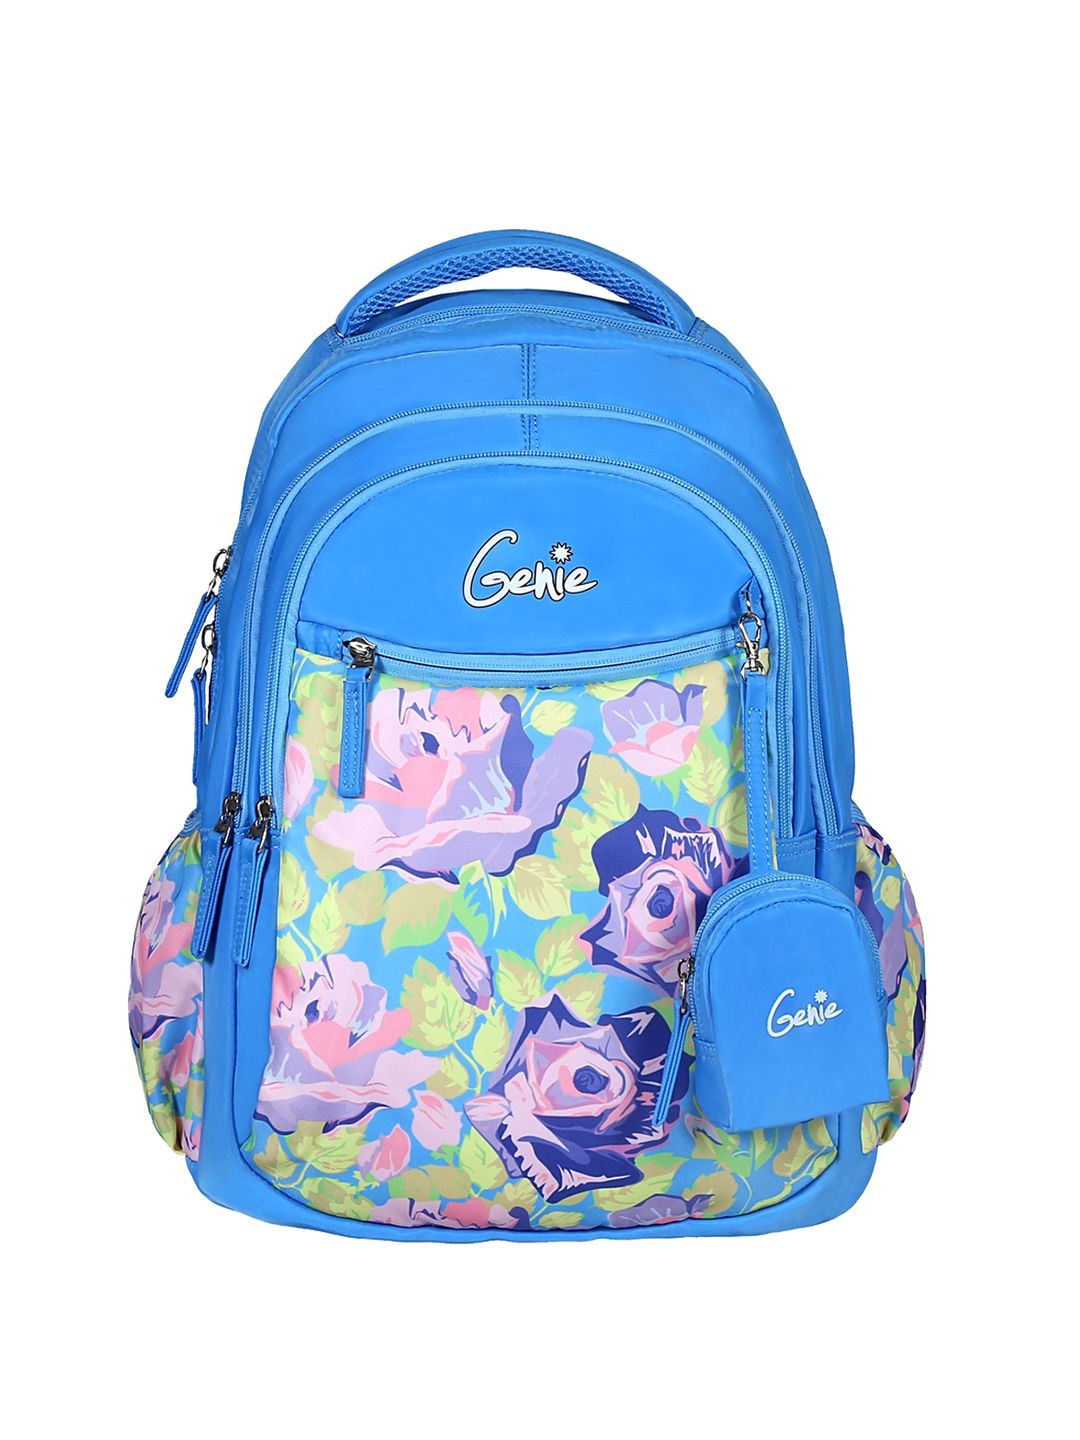 Genie Women Blue Floral Printed 36 liter Backpack Price in India